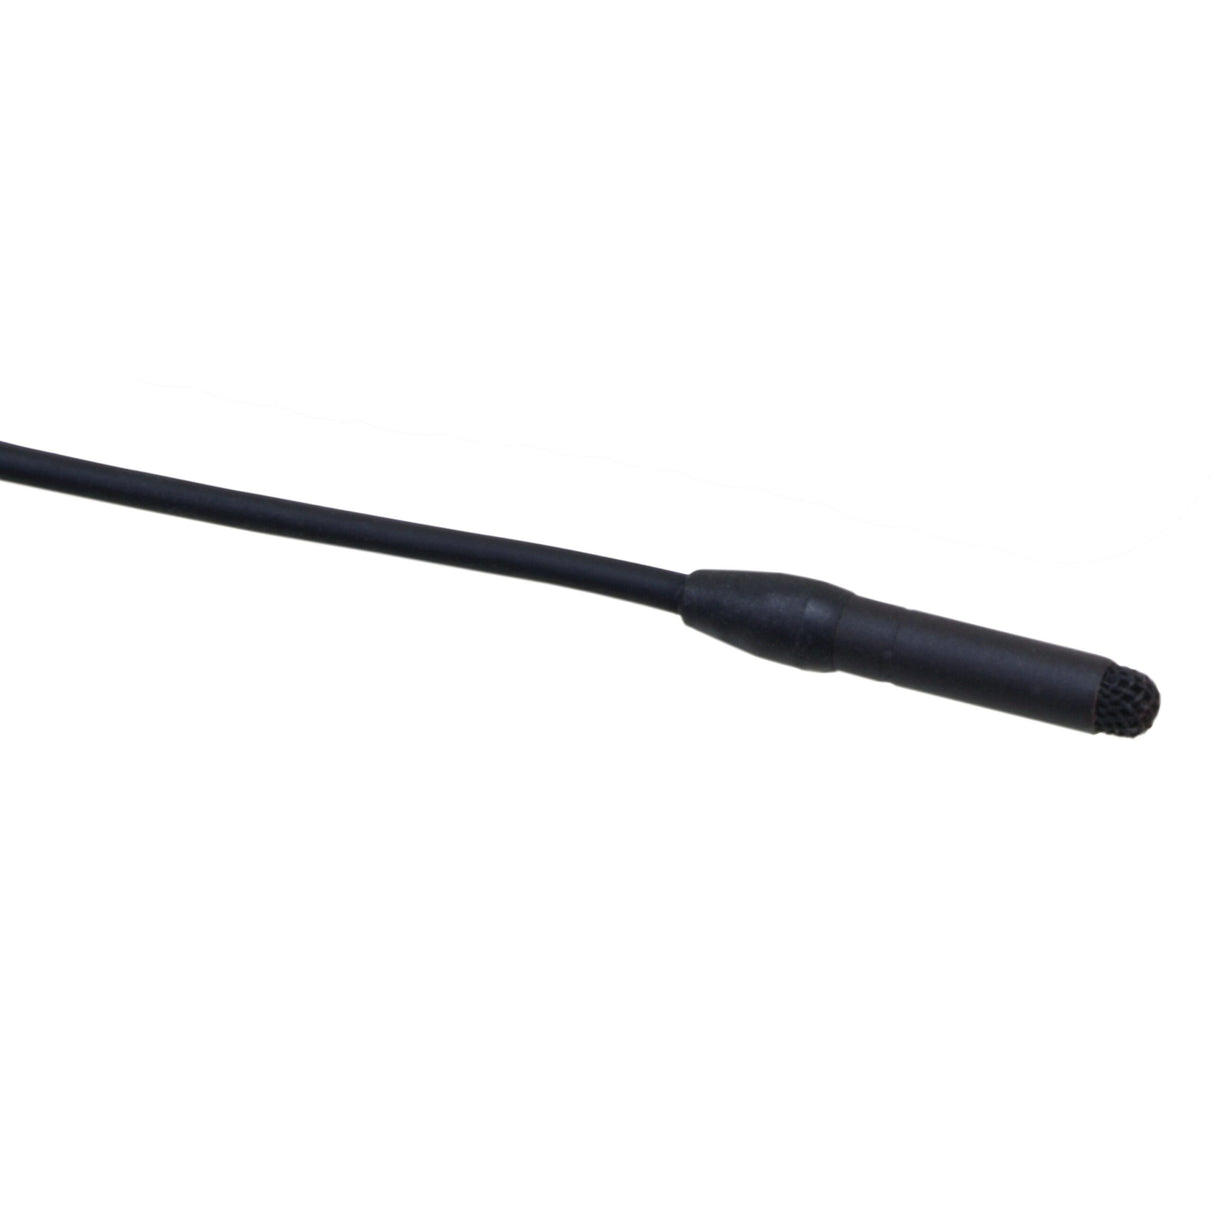 Sanken COS-11D-PT-RM-1.8-BK Omnidirectional Lavalier Microphone, Black, Pigtail, Reduced Sensitivity, 1.8m Stripped Cable